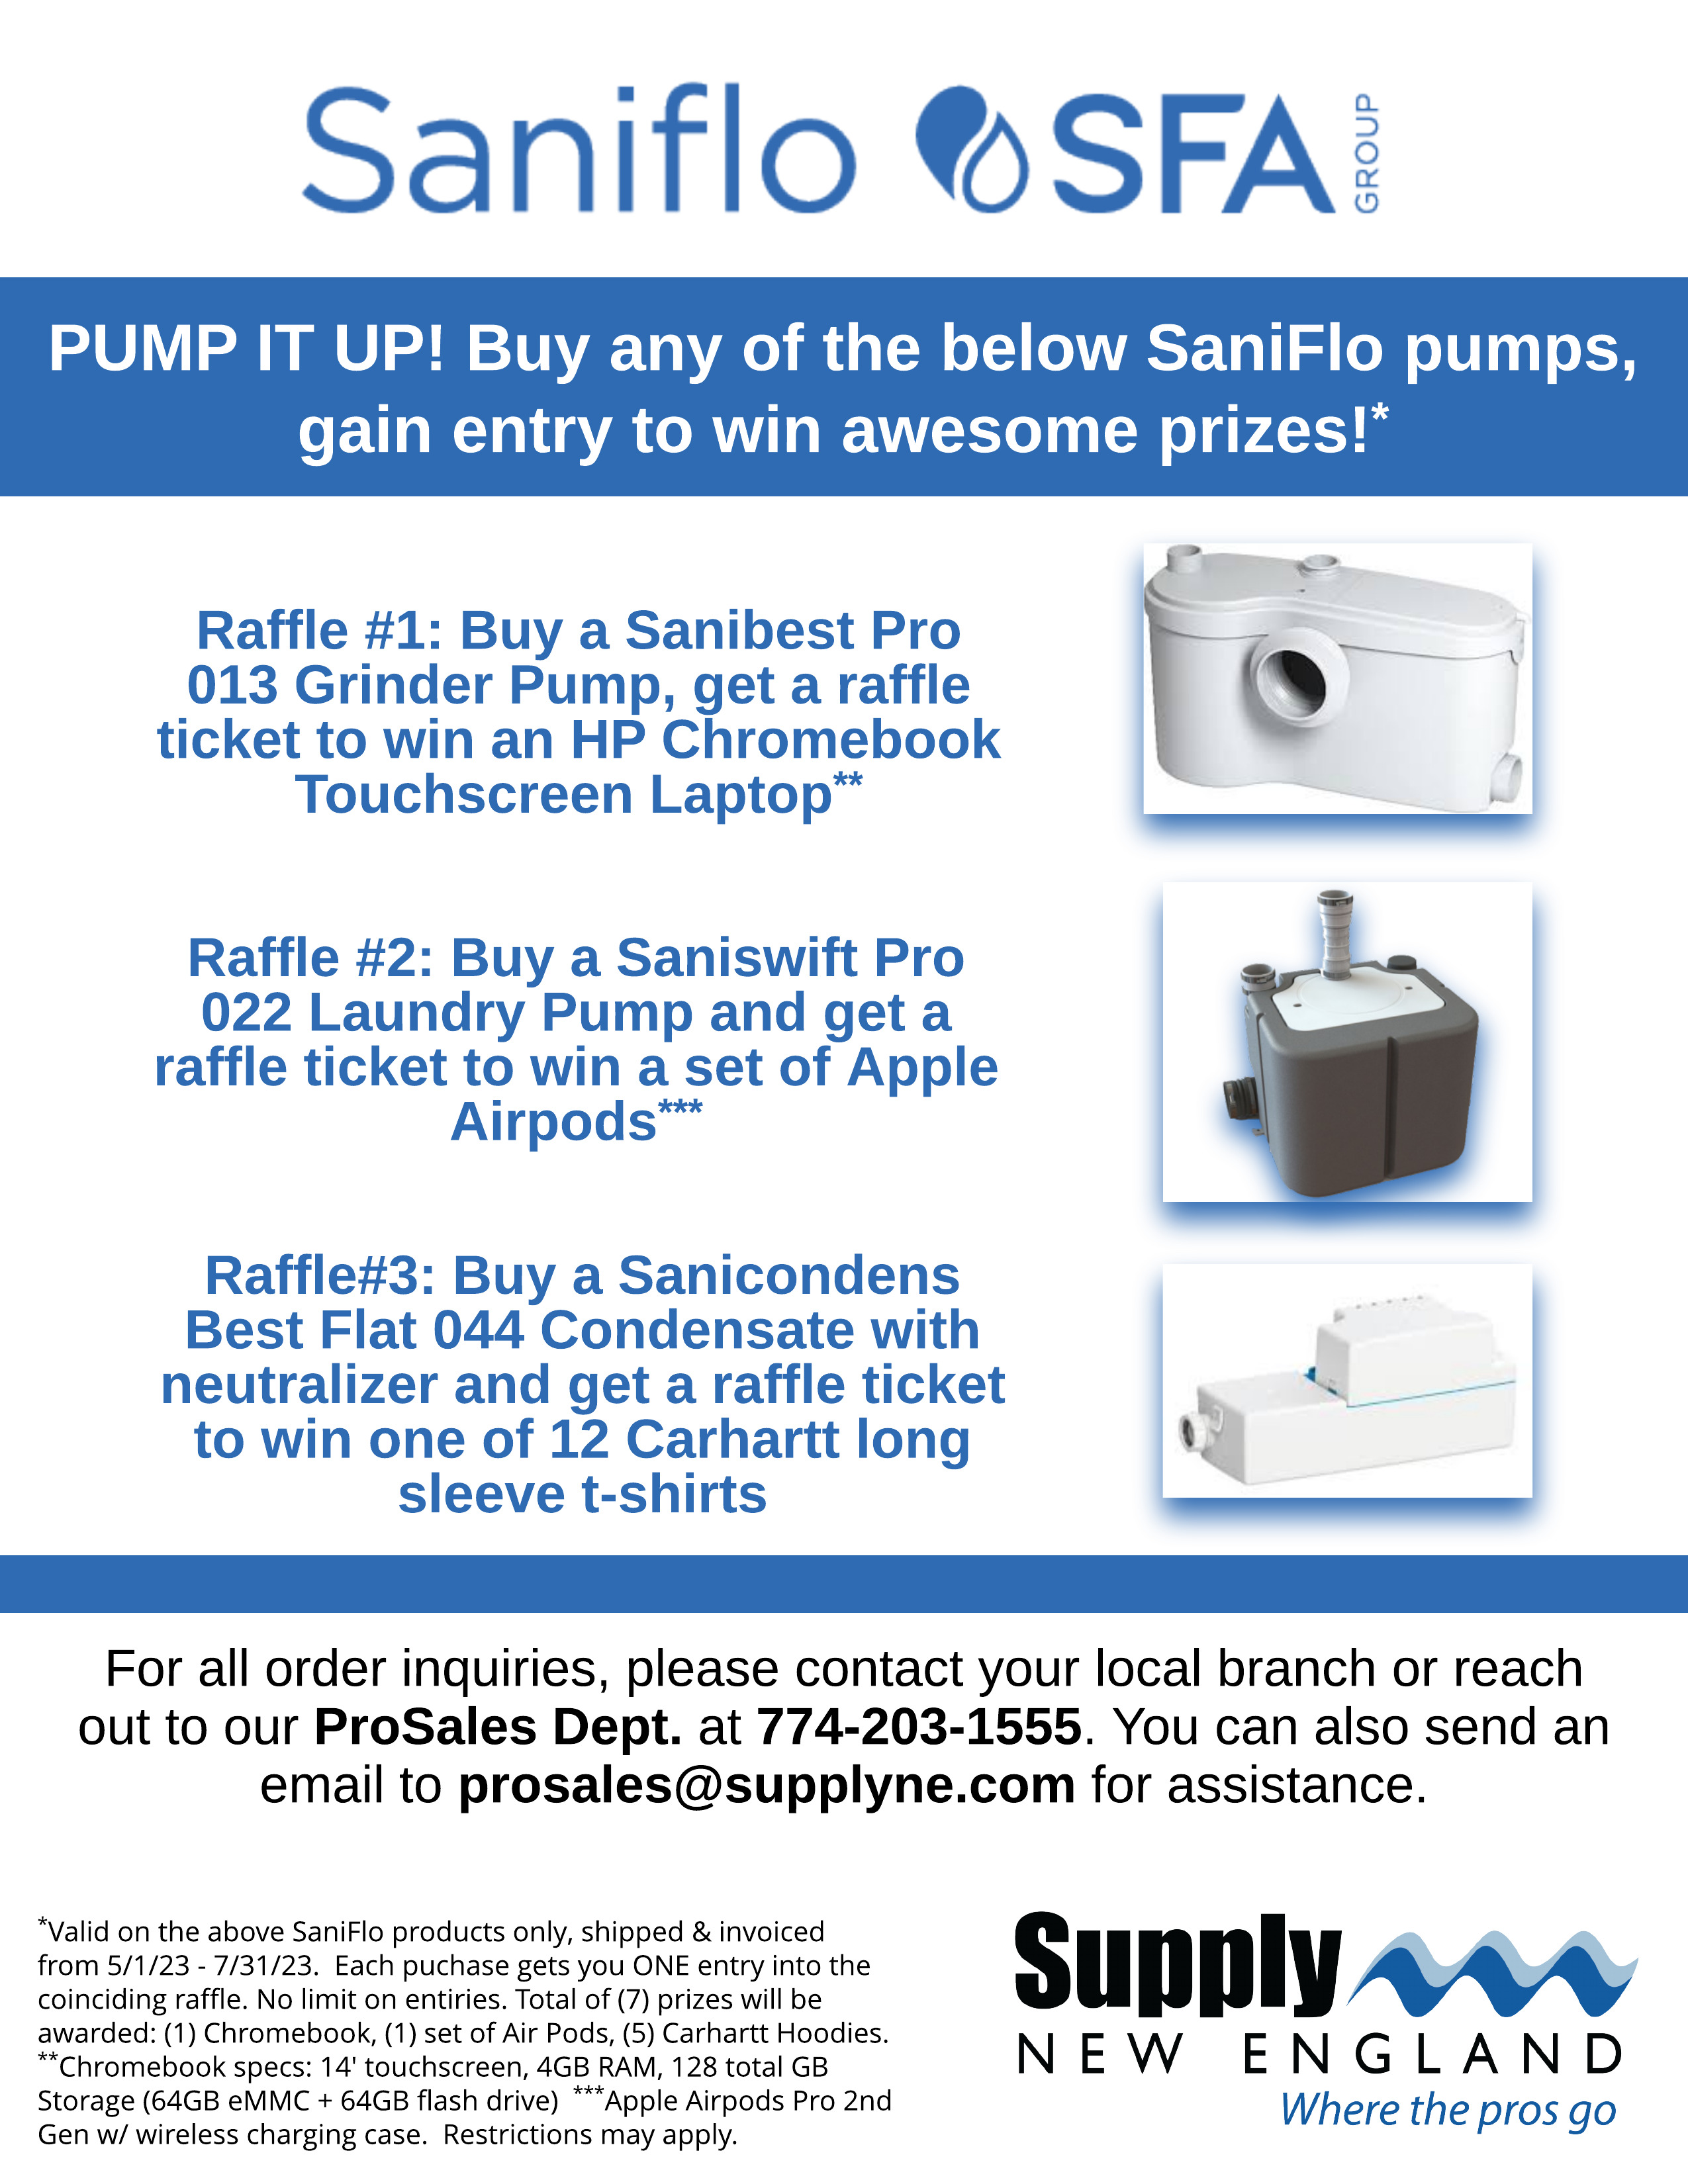 SaniFlo Pump it Up Promo Image